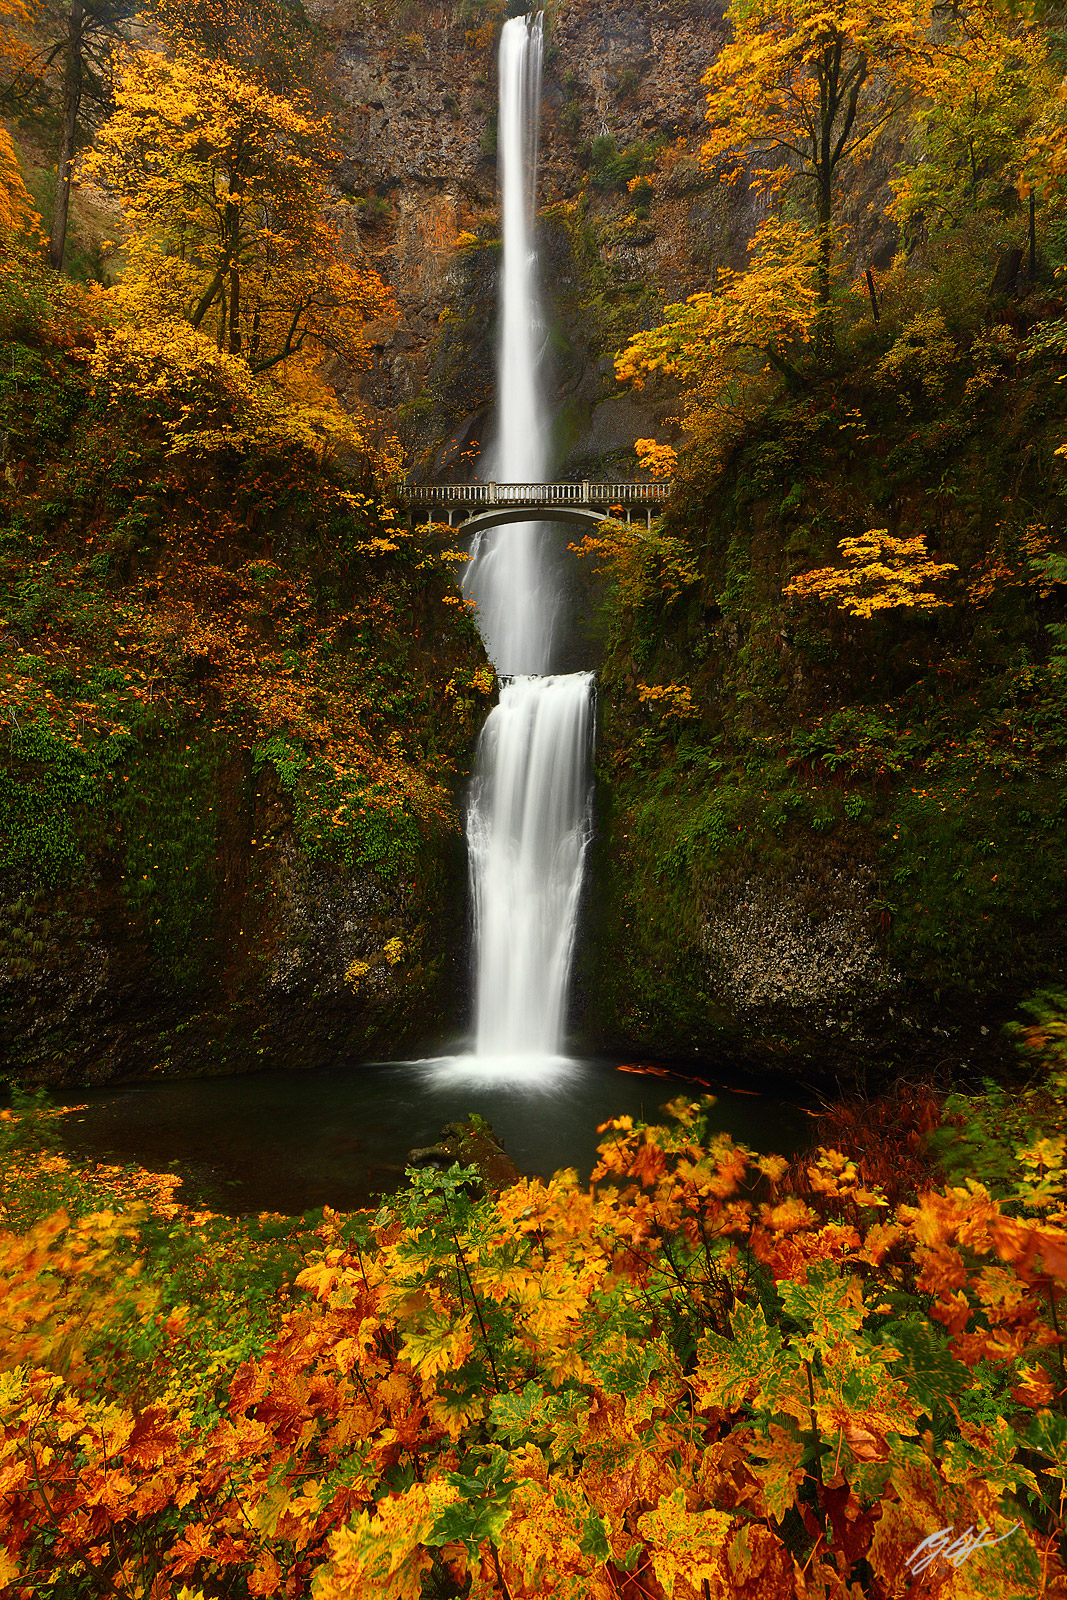 Multnomah Falls in the Columbia River Gorge National Scenic area in Oregon